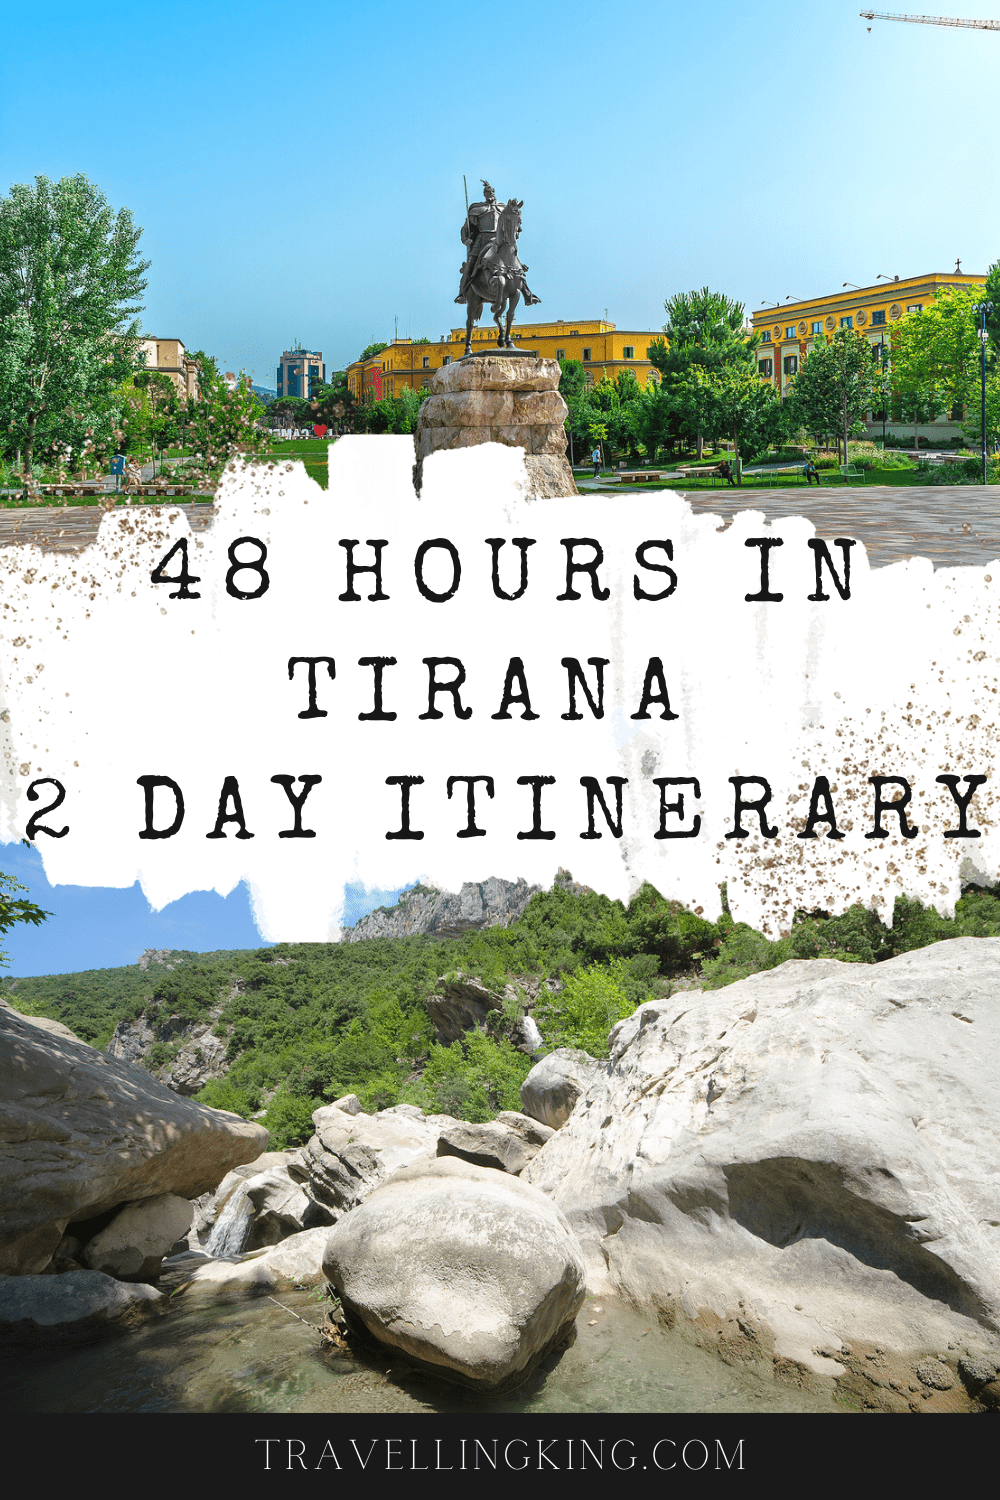 48 hours in Tirana - 2 Day Itinerary 